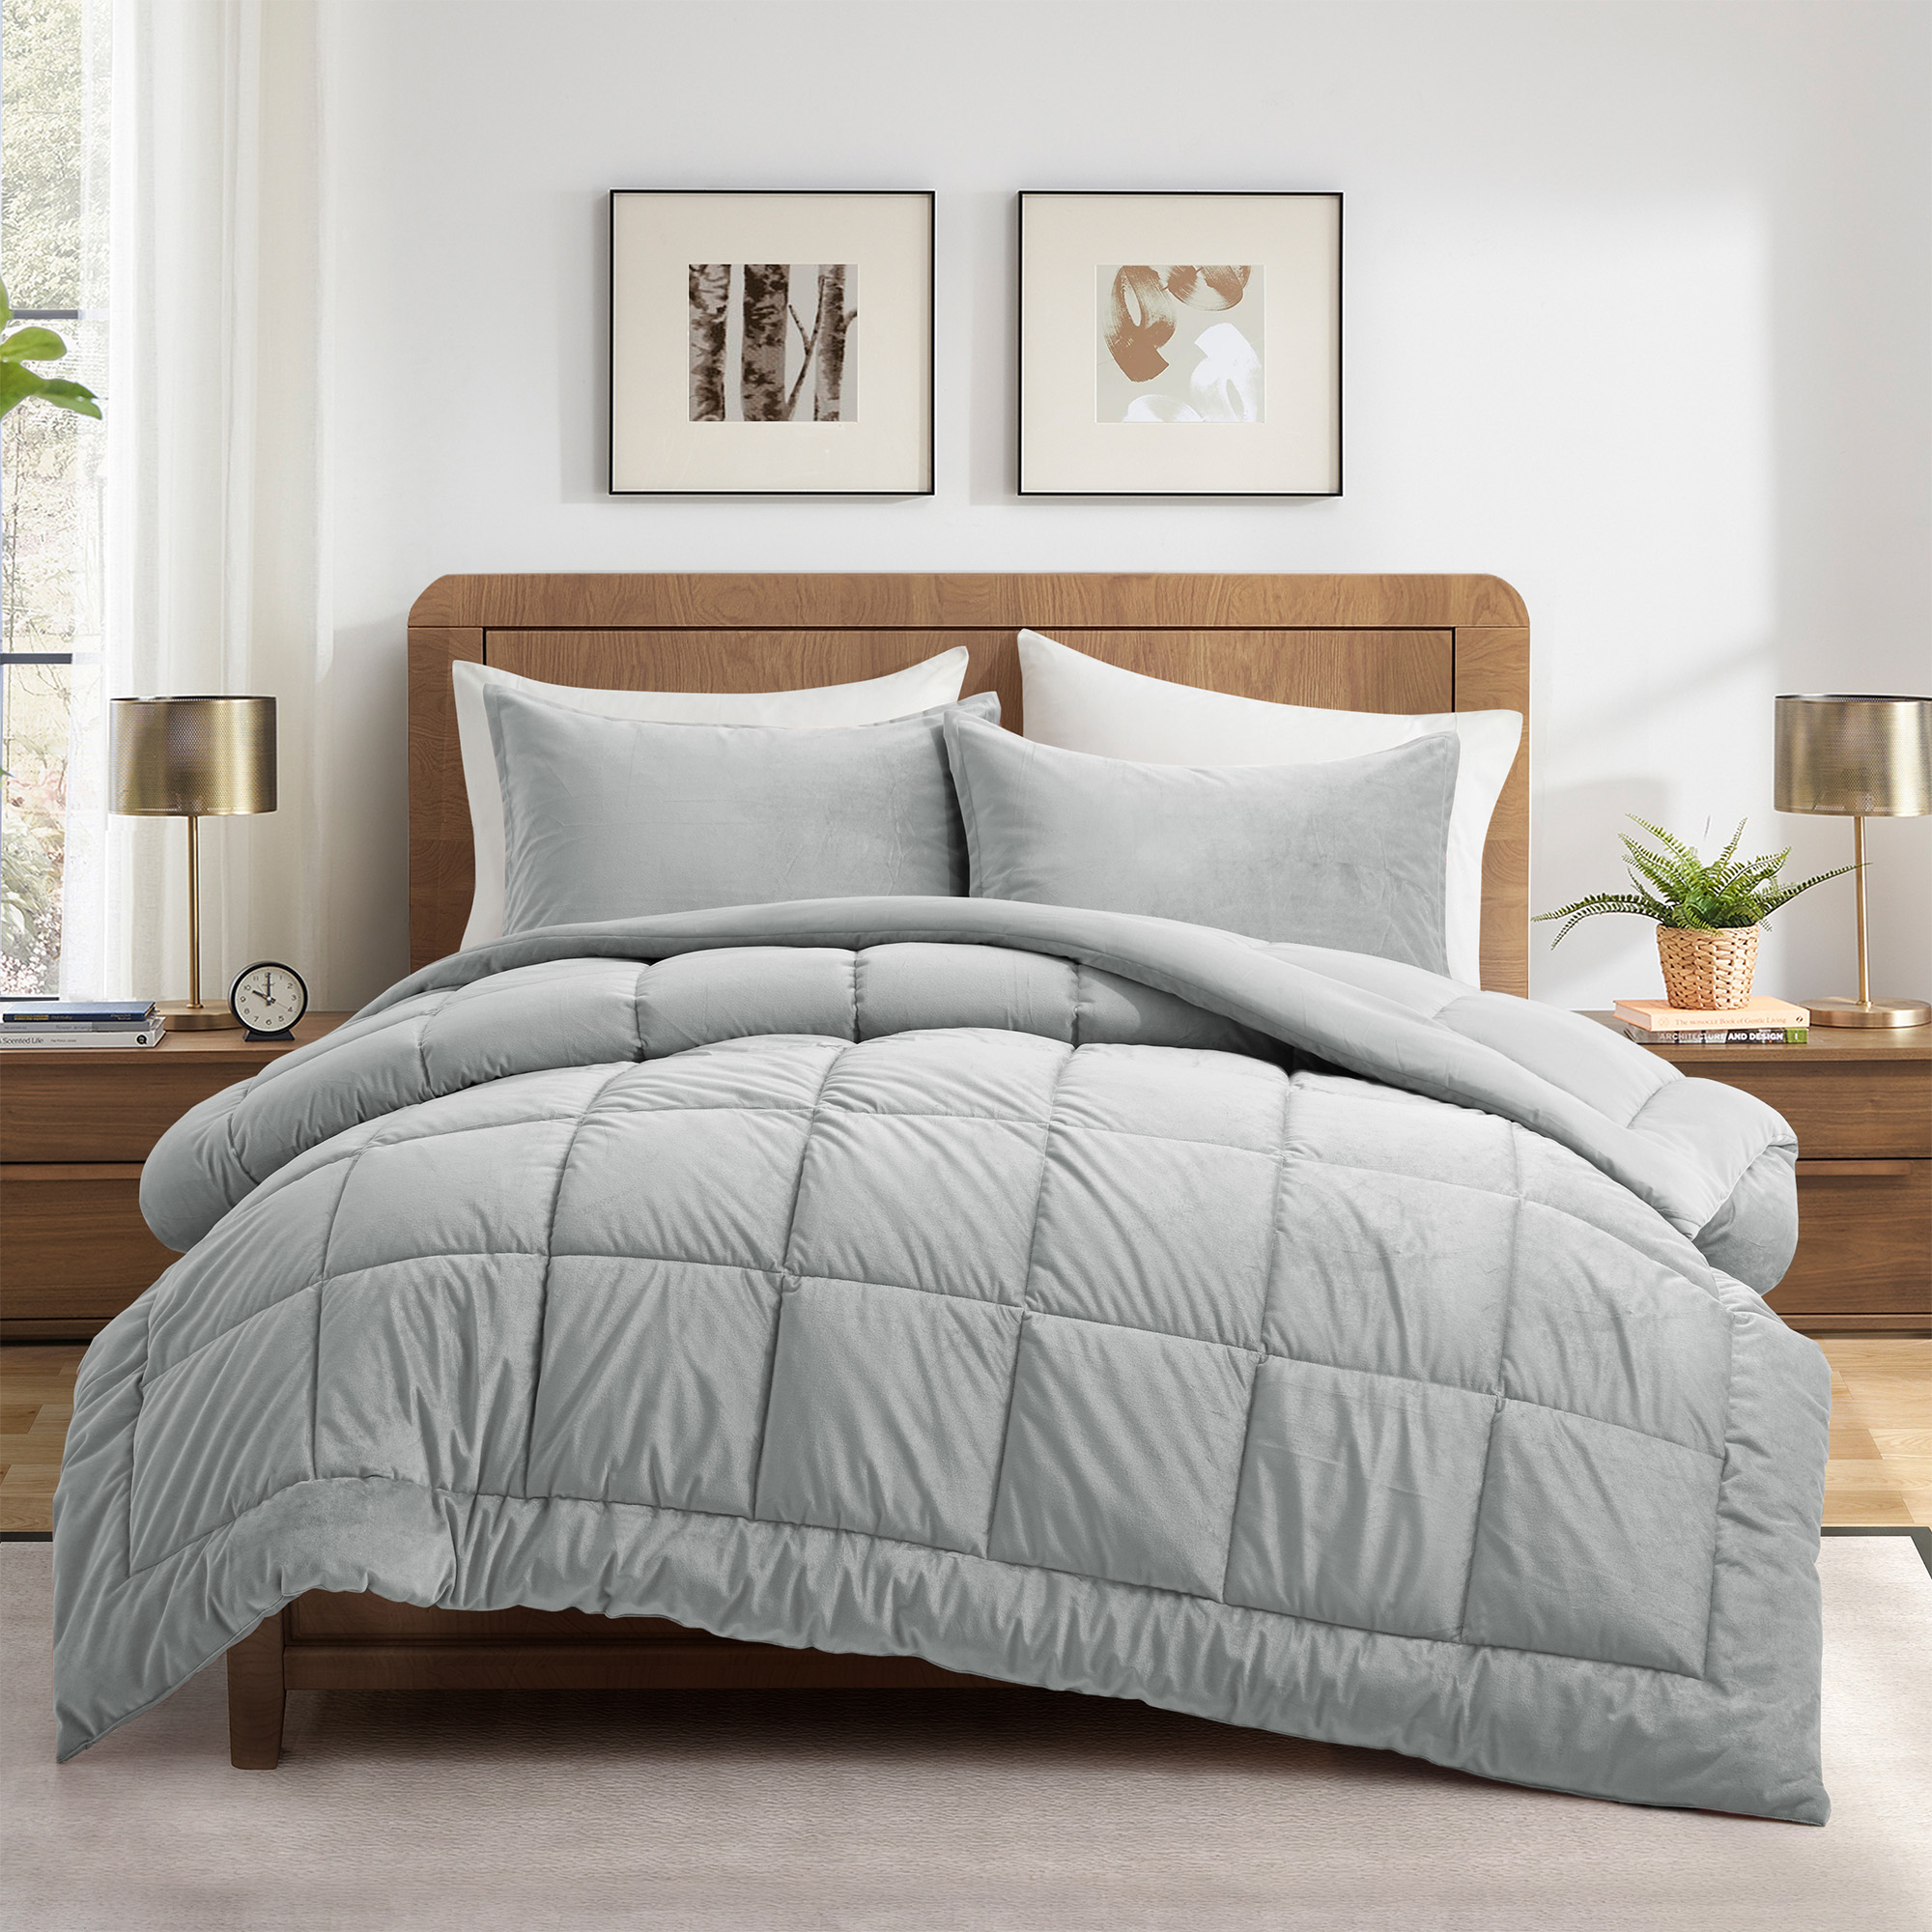 3 Piece Reversible Velvet Comforter Set With Sham - Grey, Twin